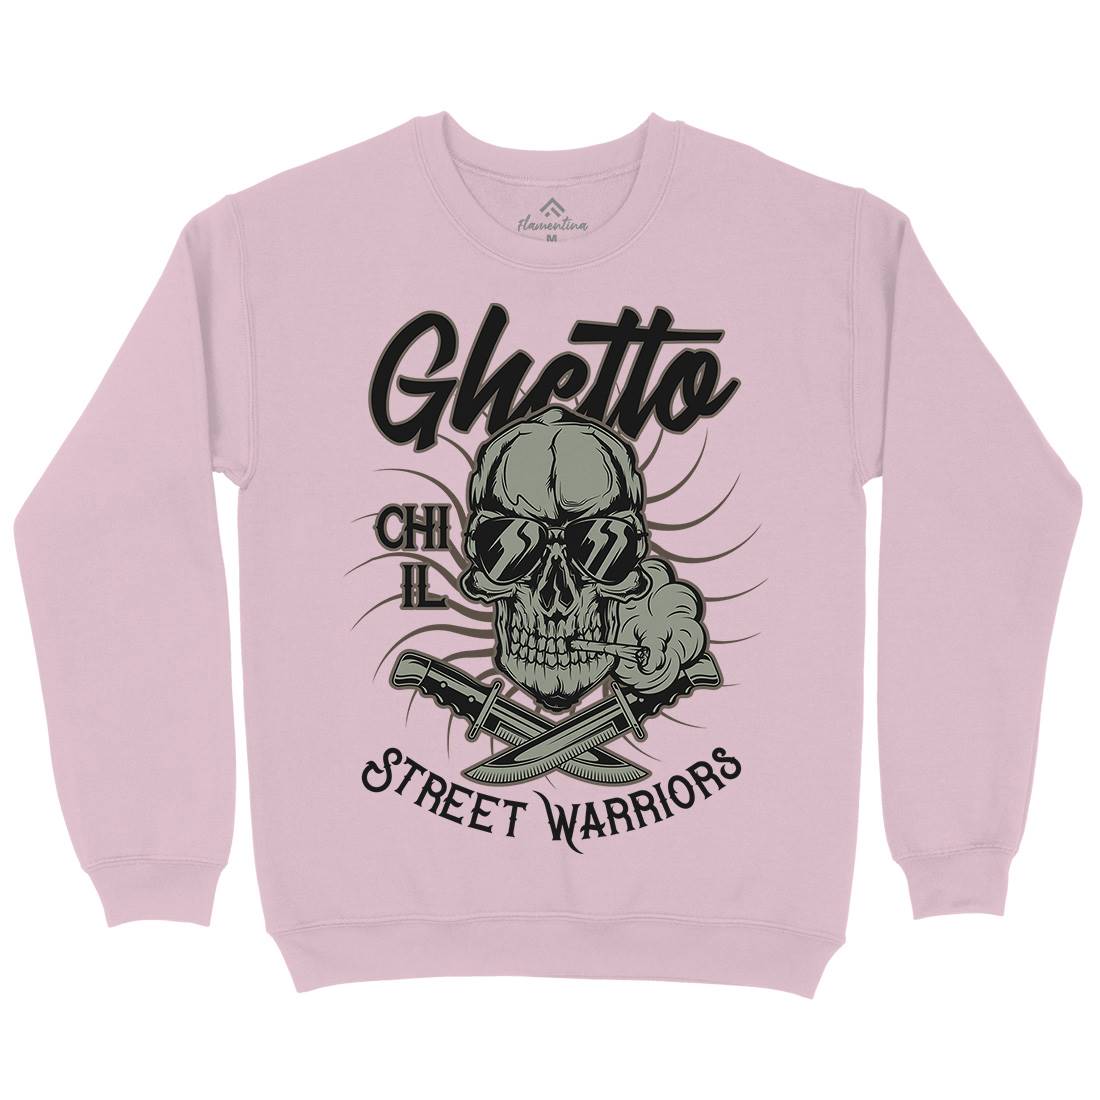 Ghetto Street Warriors Kids Crew Neck Sweatshirt Retro D937